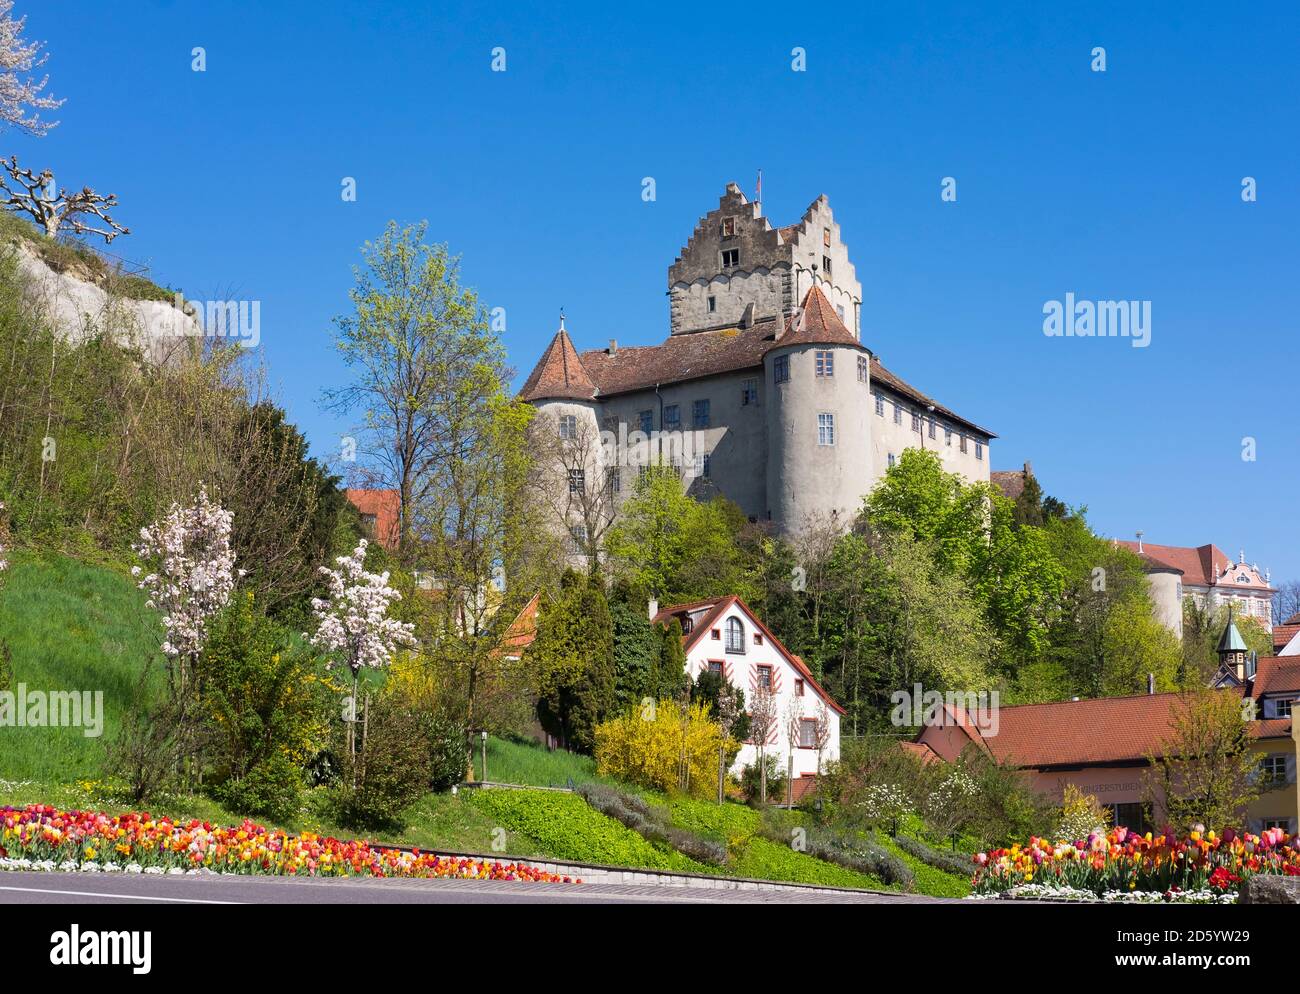 Germania, Meersburg, Castello di Meersburg Foto Stock